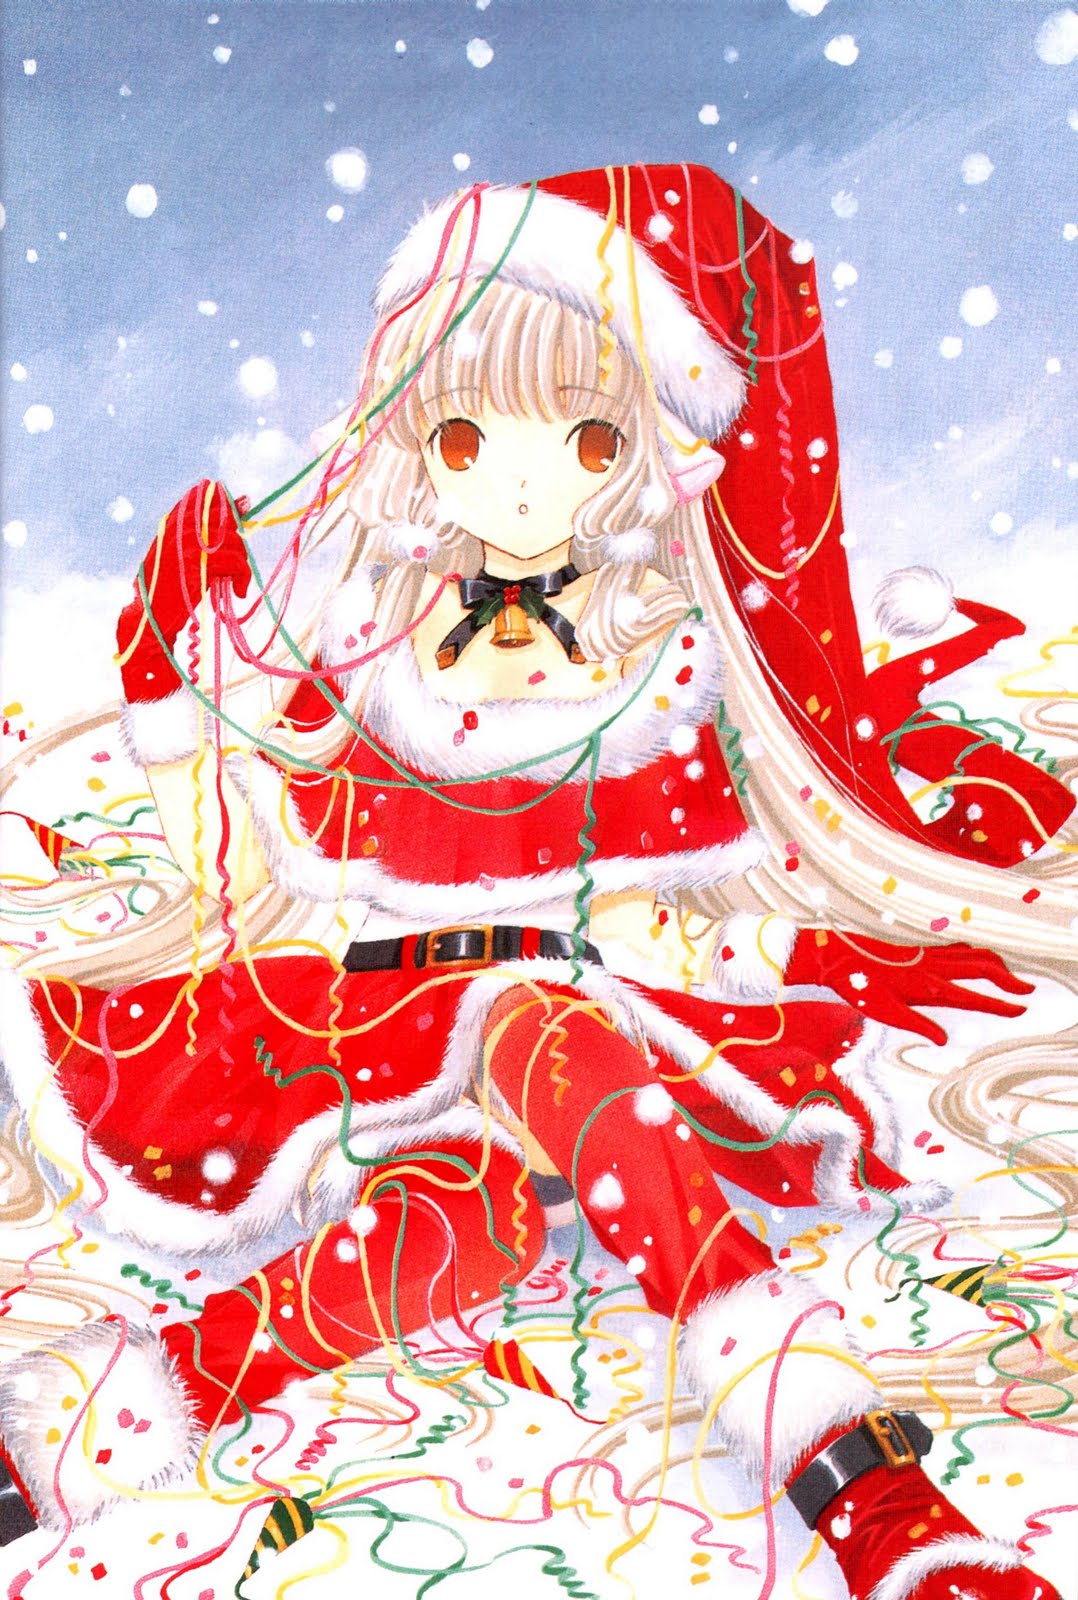 navidad anime wallpaper,dibujos animados,anime,nochebuena,ilustración,cg artwork